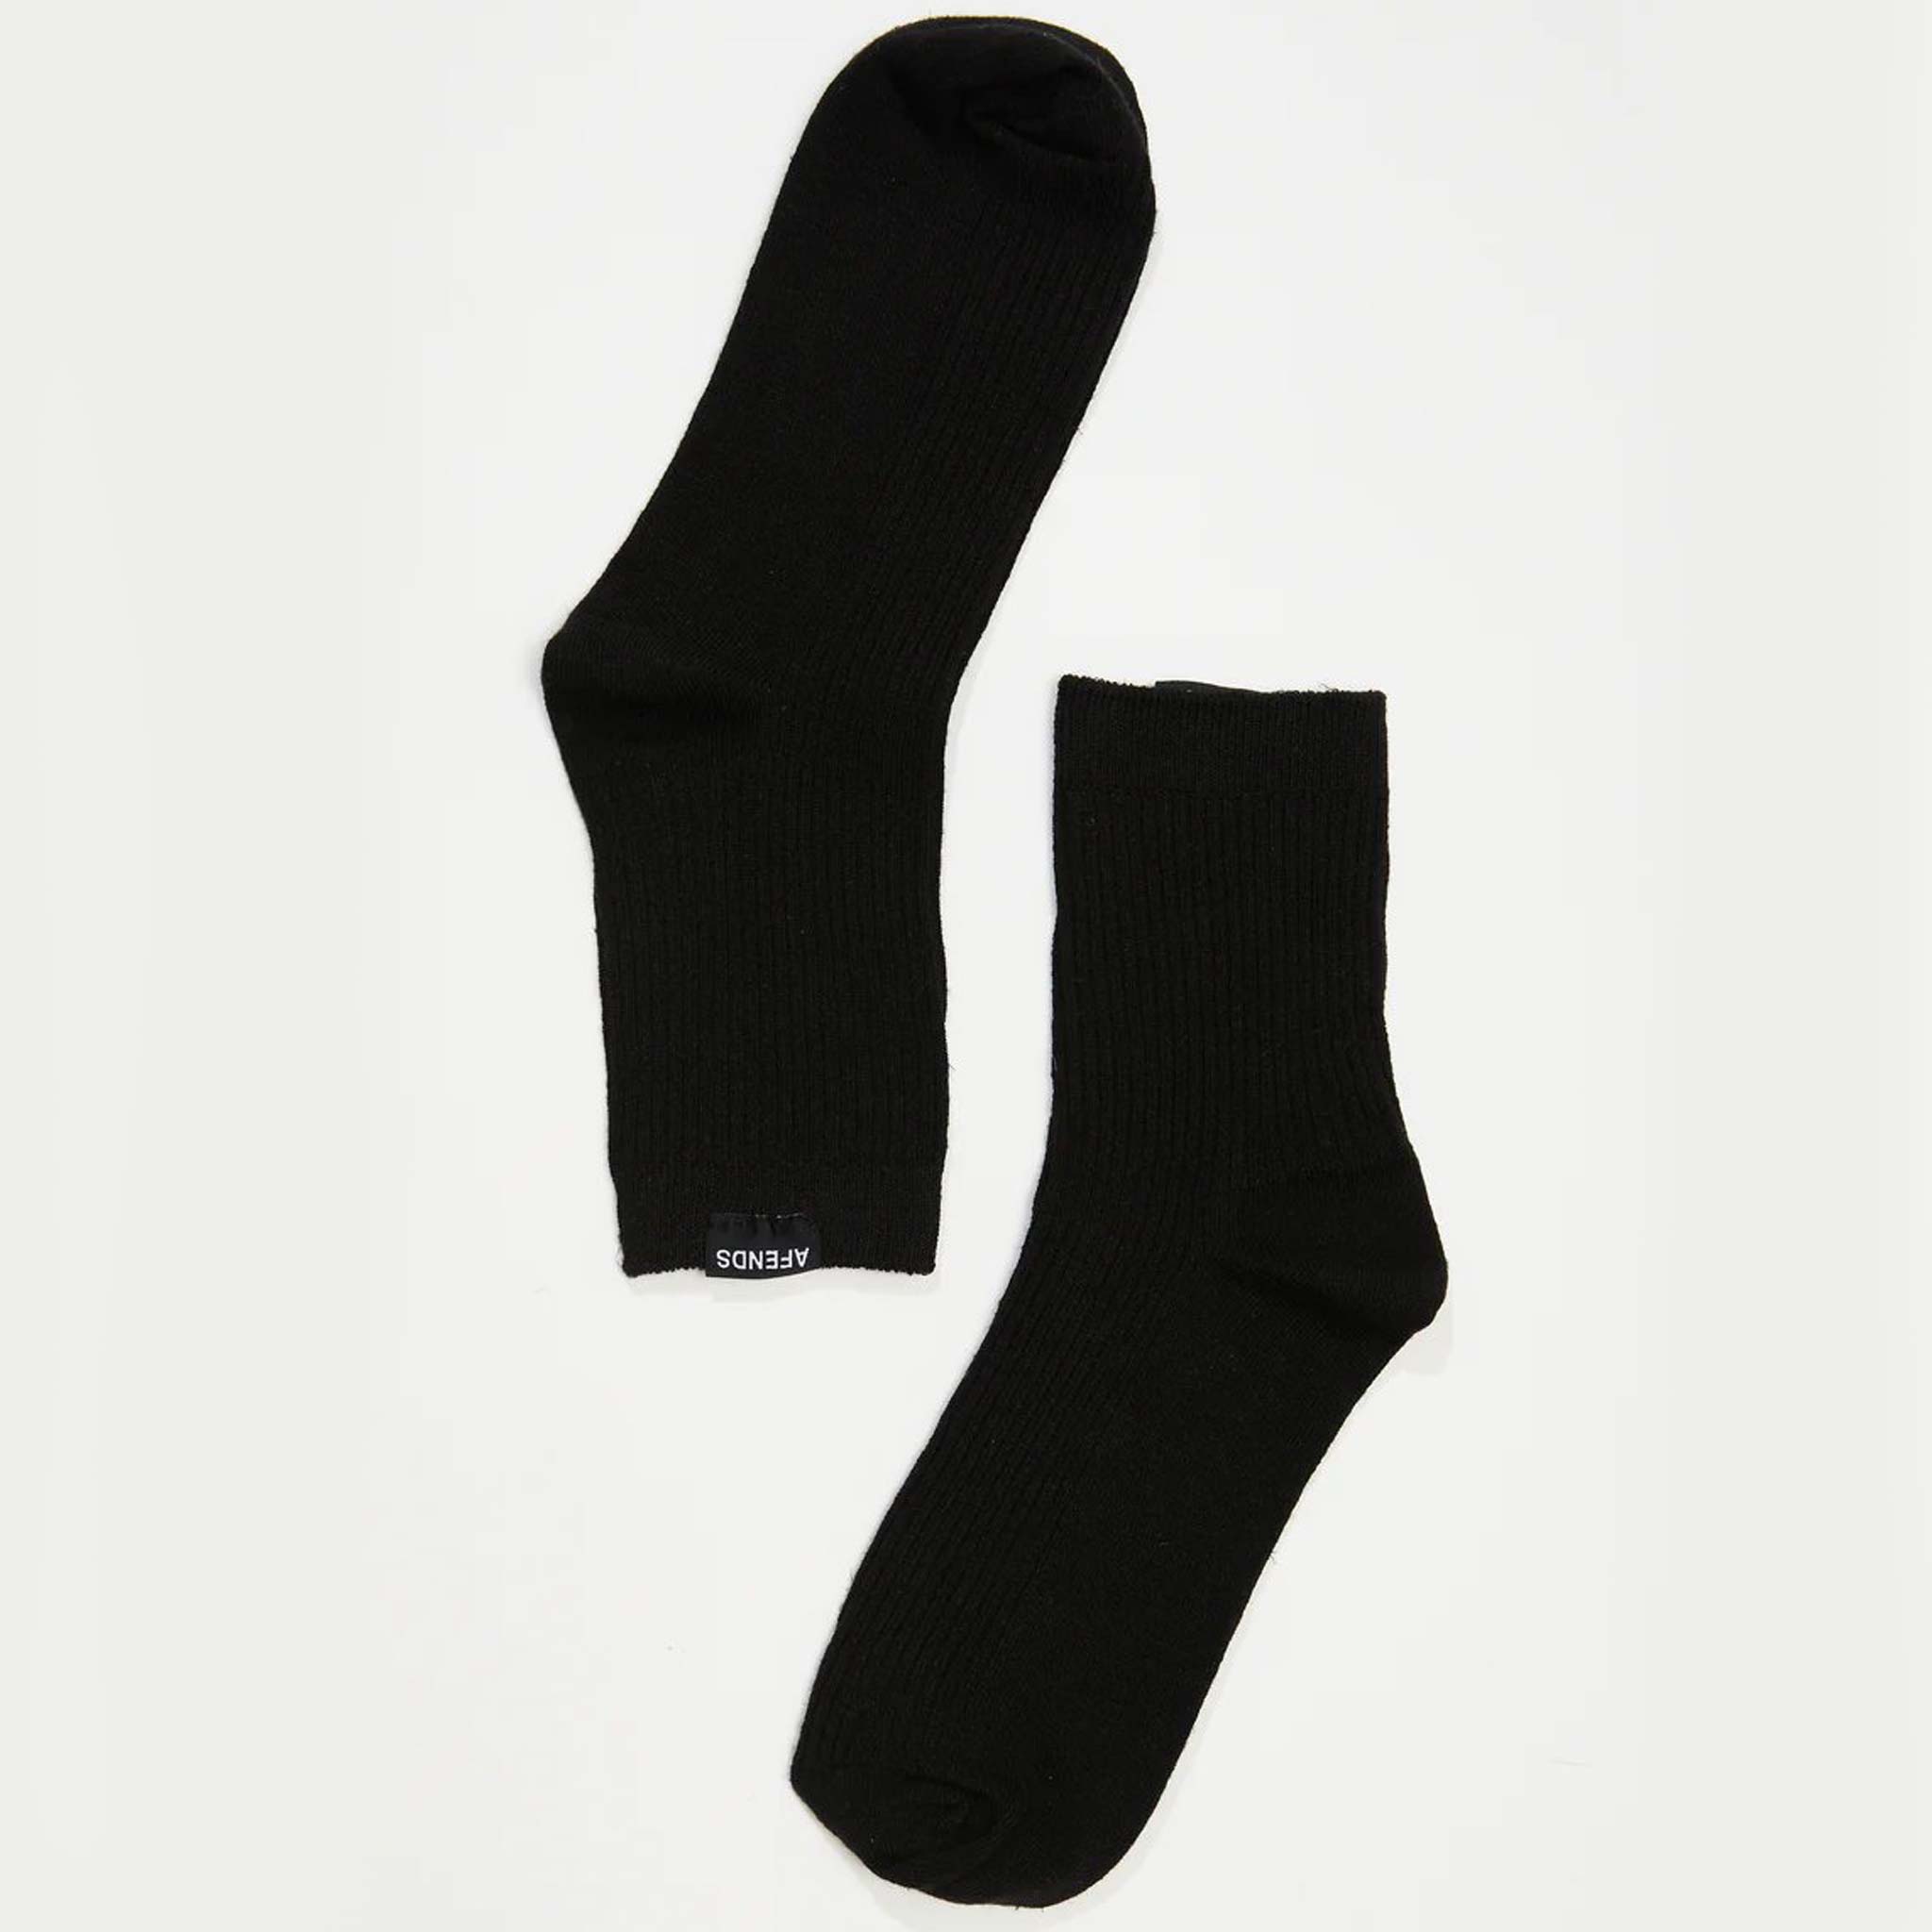 The Essential Hemp Rib Socks